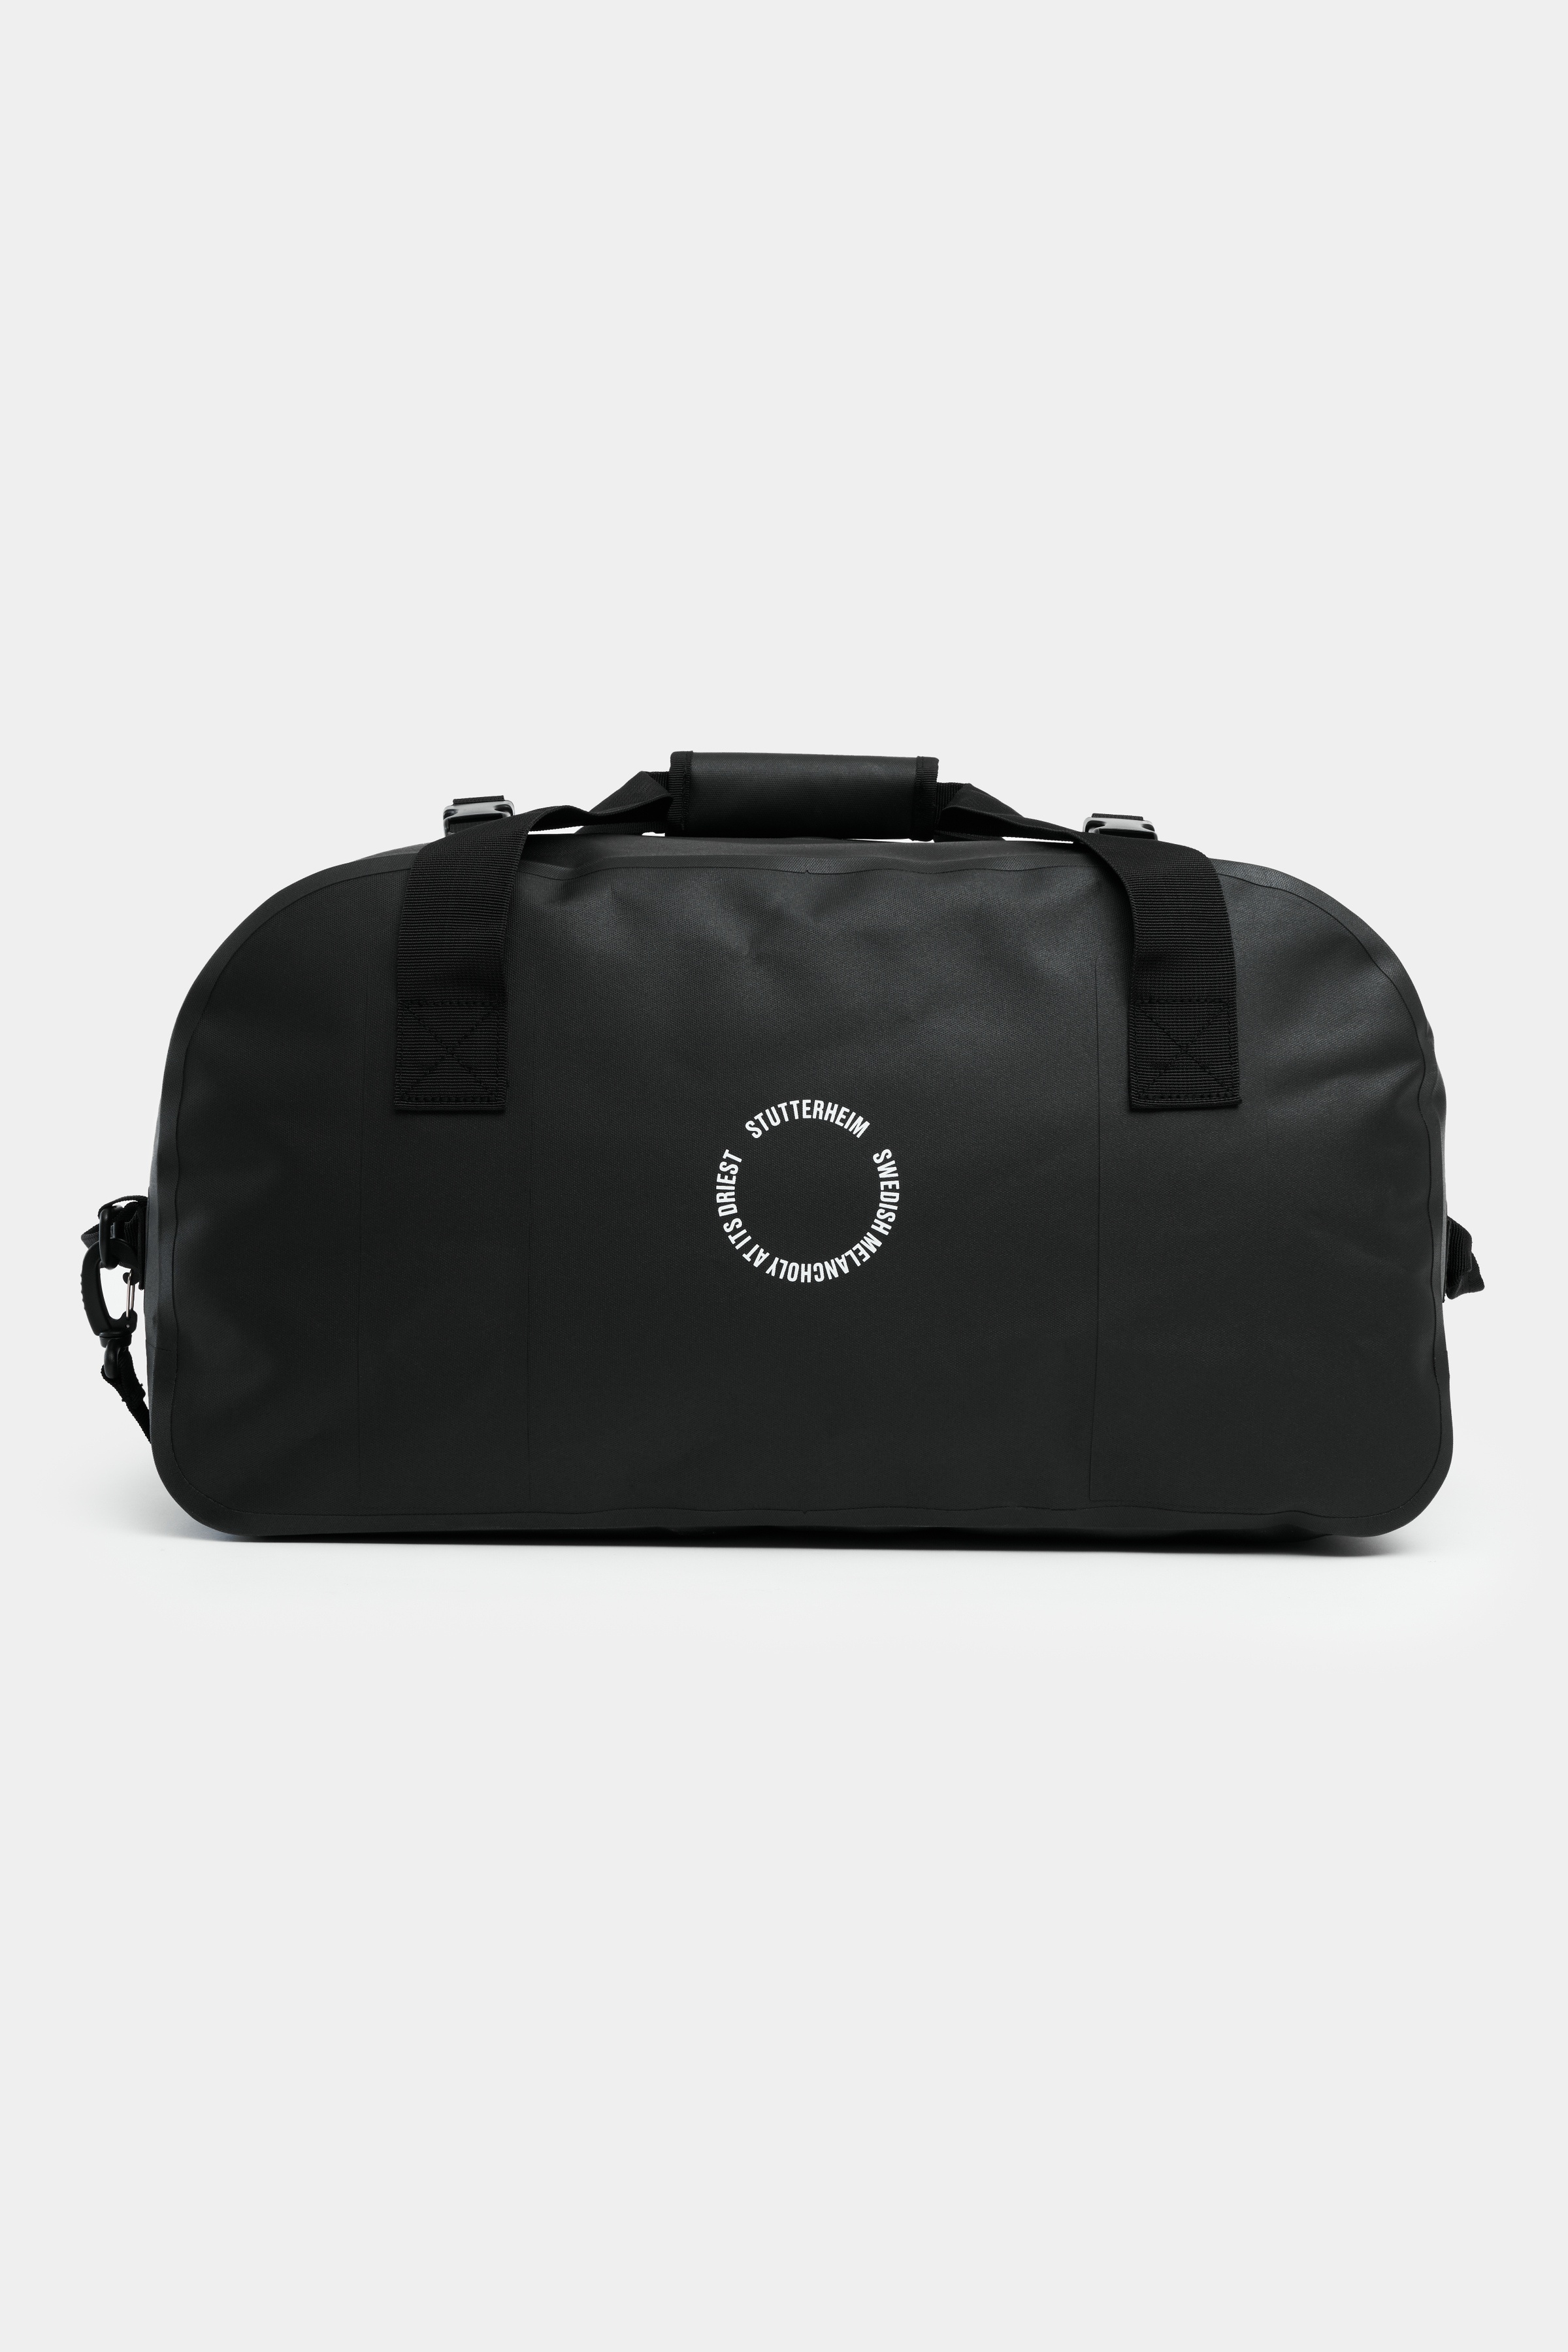 Rain Duffel Bag 50L Black - 3